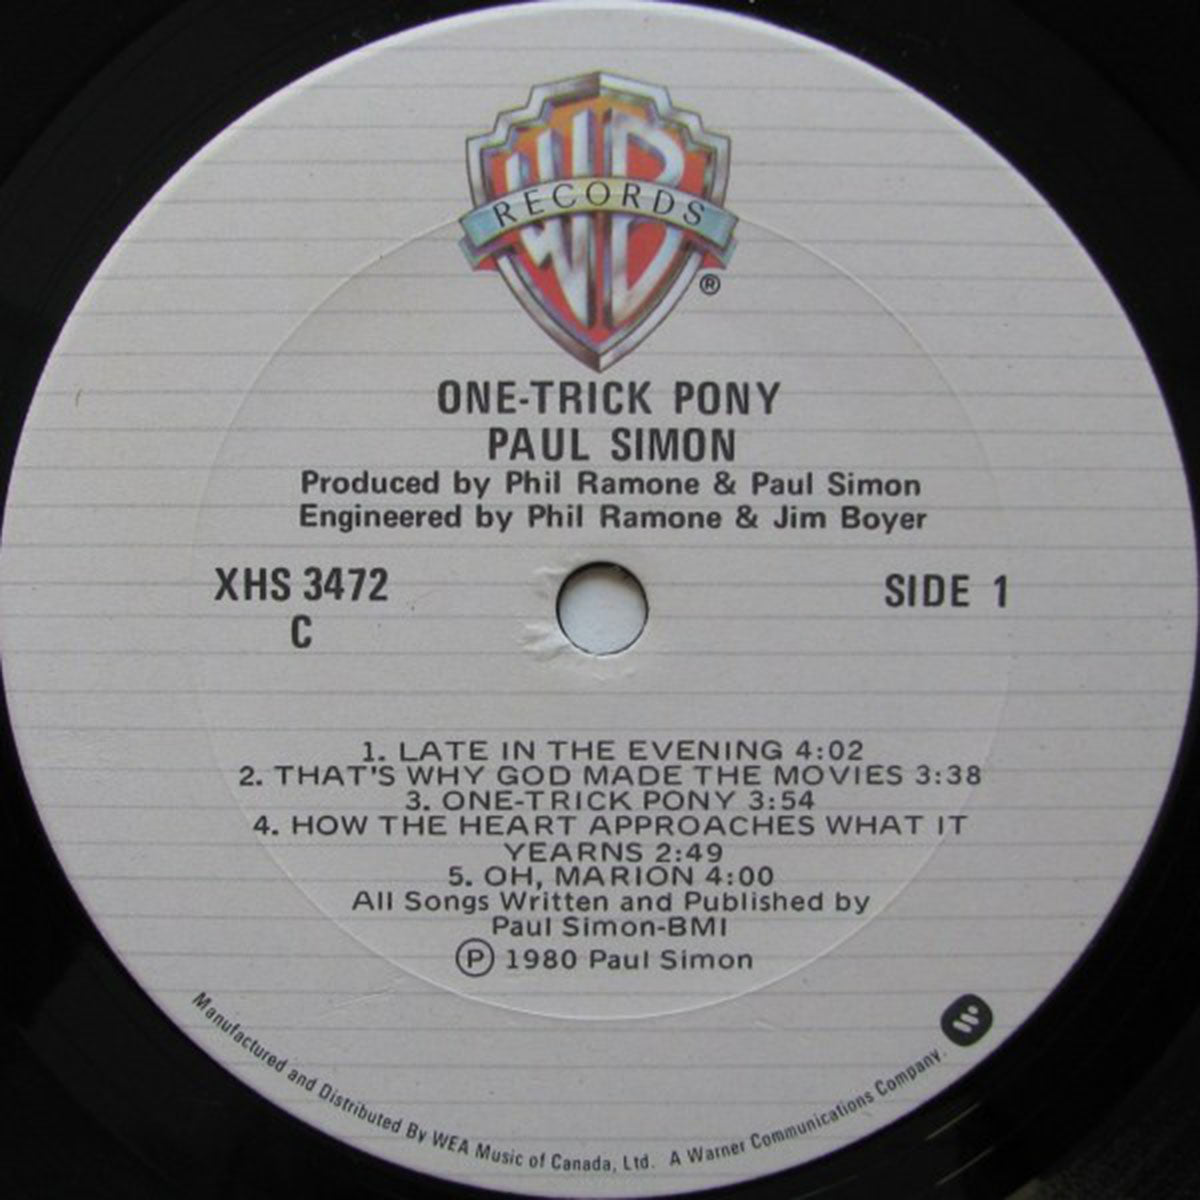 Paul Simon – One-Trick Pony - 1980